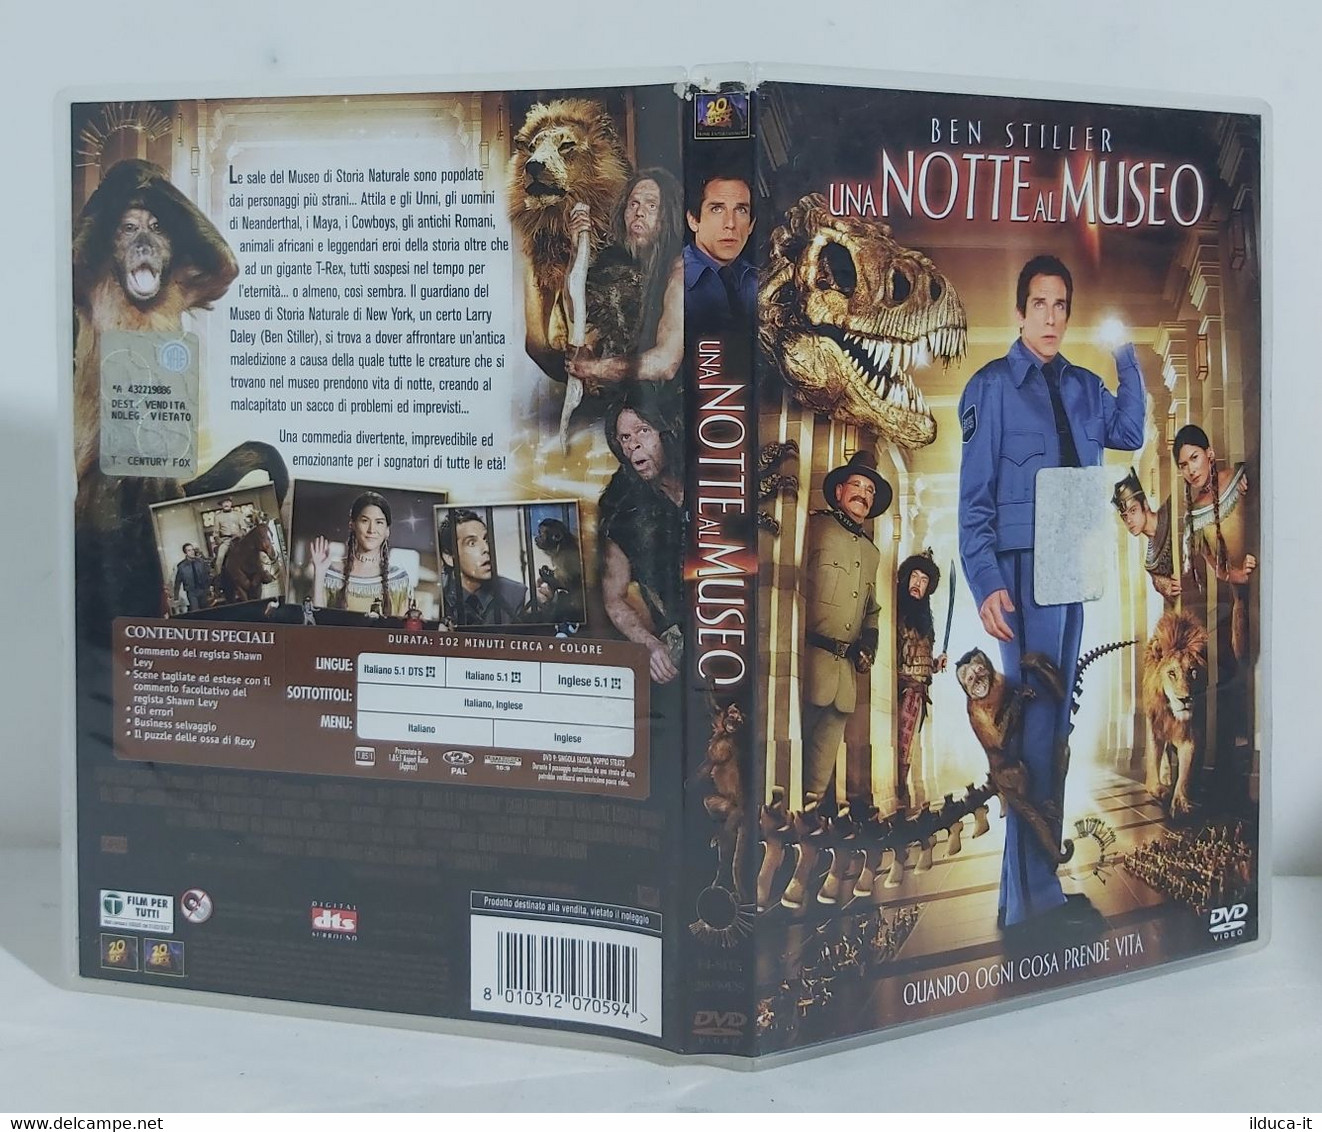 I102780 DVD - UNA NOTTE AL MUSEO (2006) - Ben Stiller - Fantasía